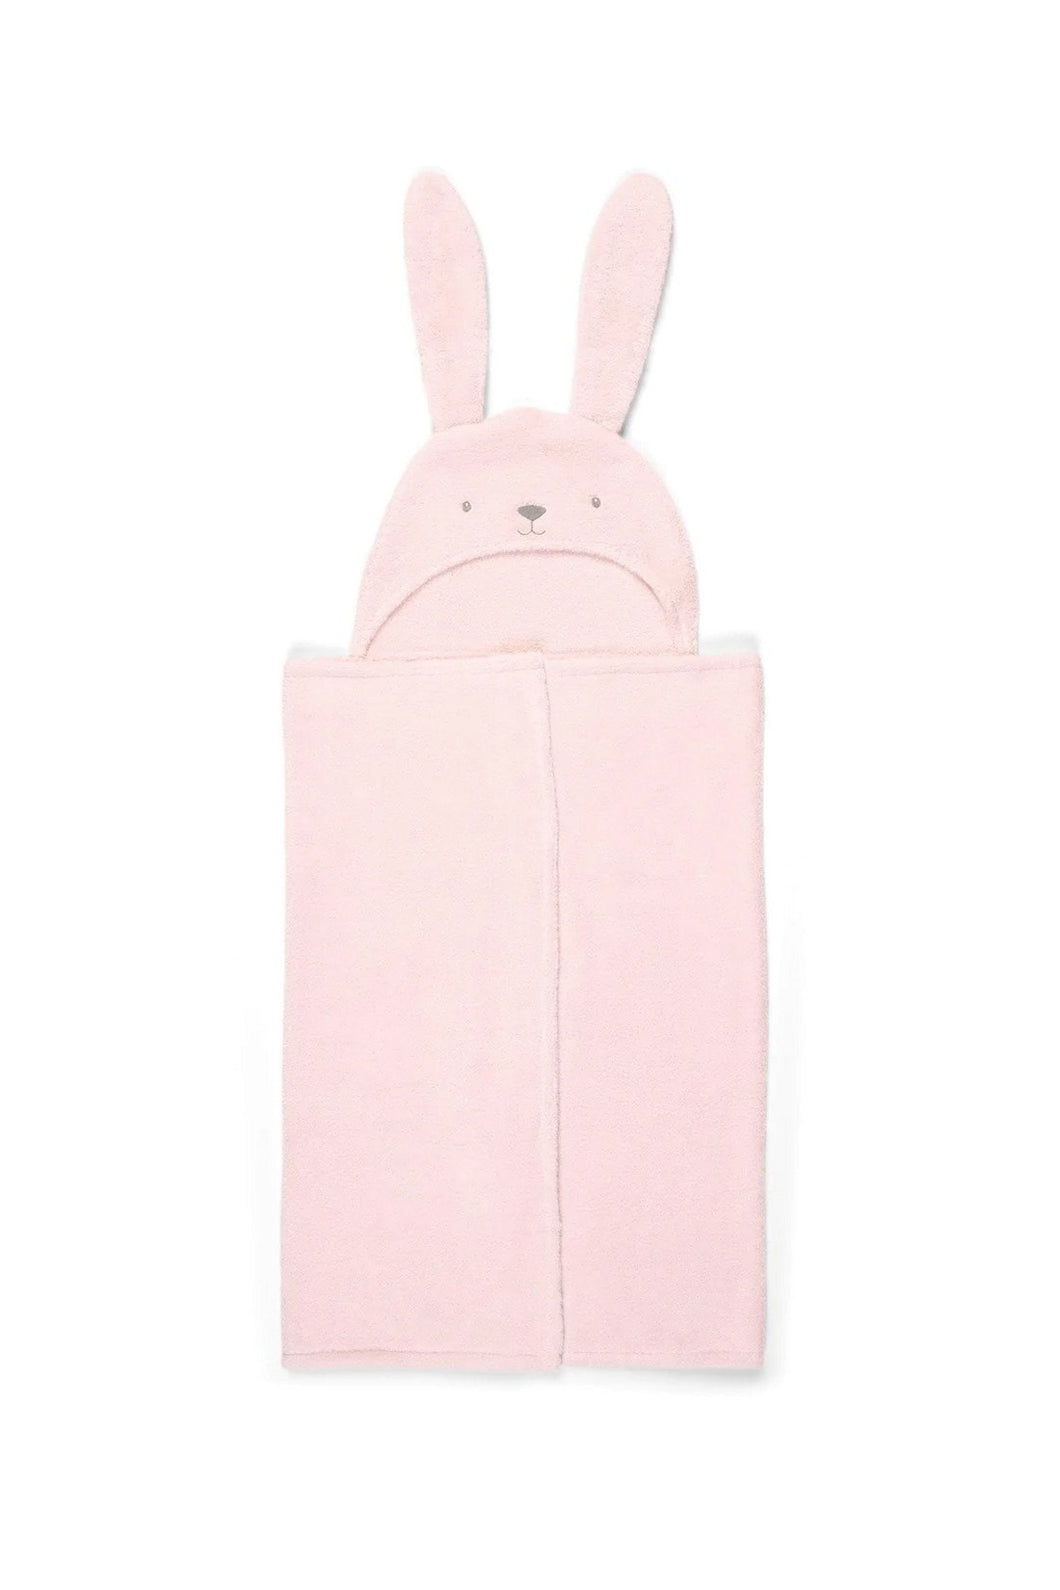 Mamas & Papas Hooded Towel Pink Bunny 2